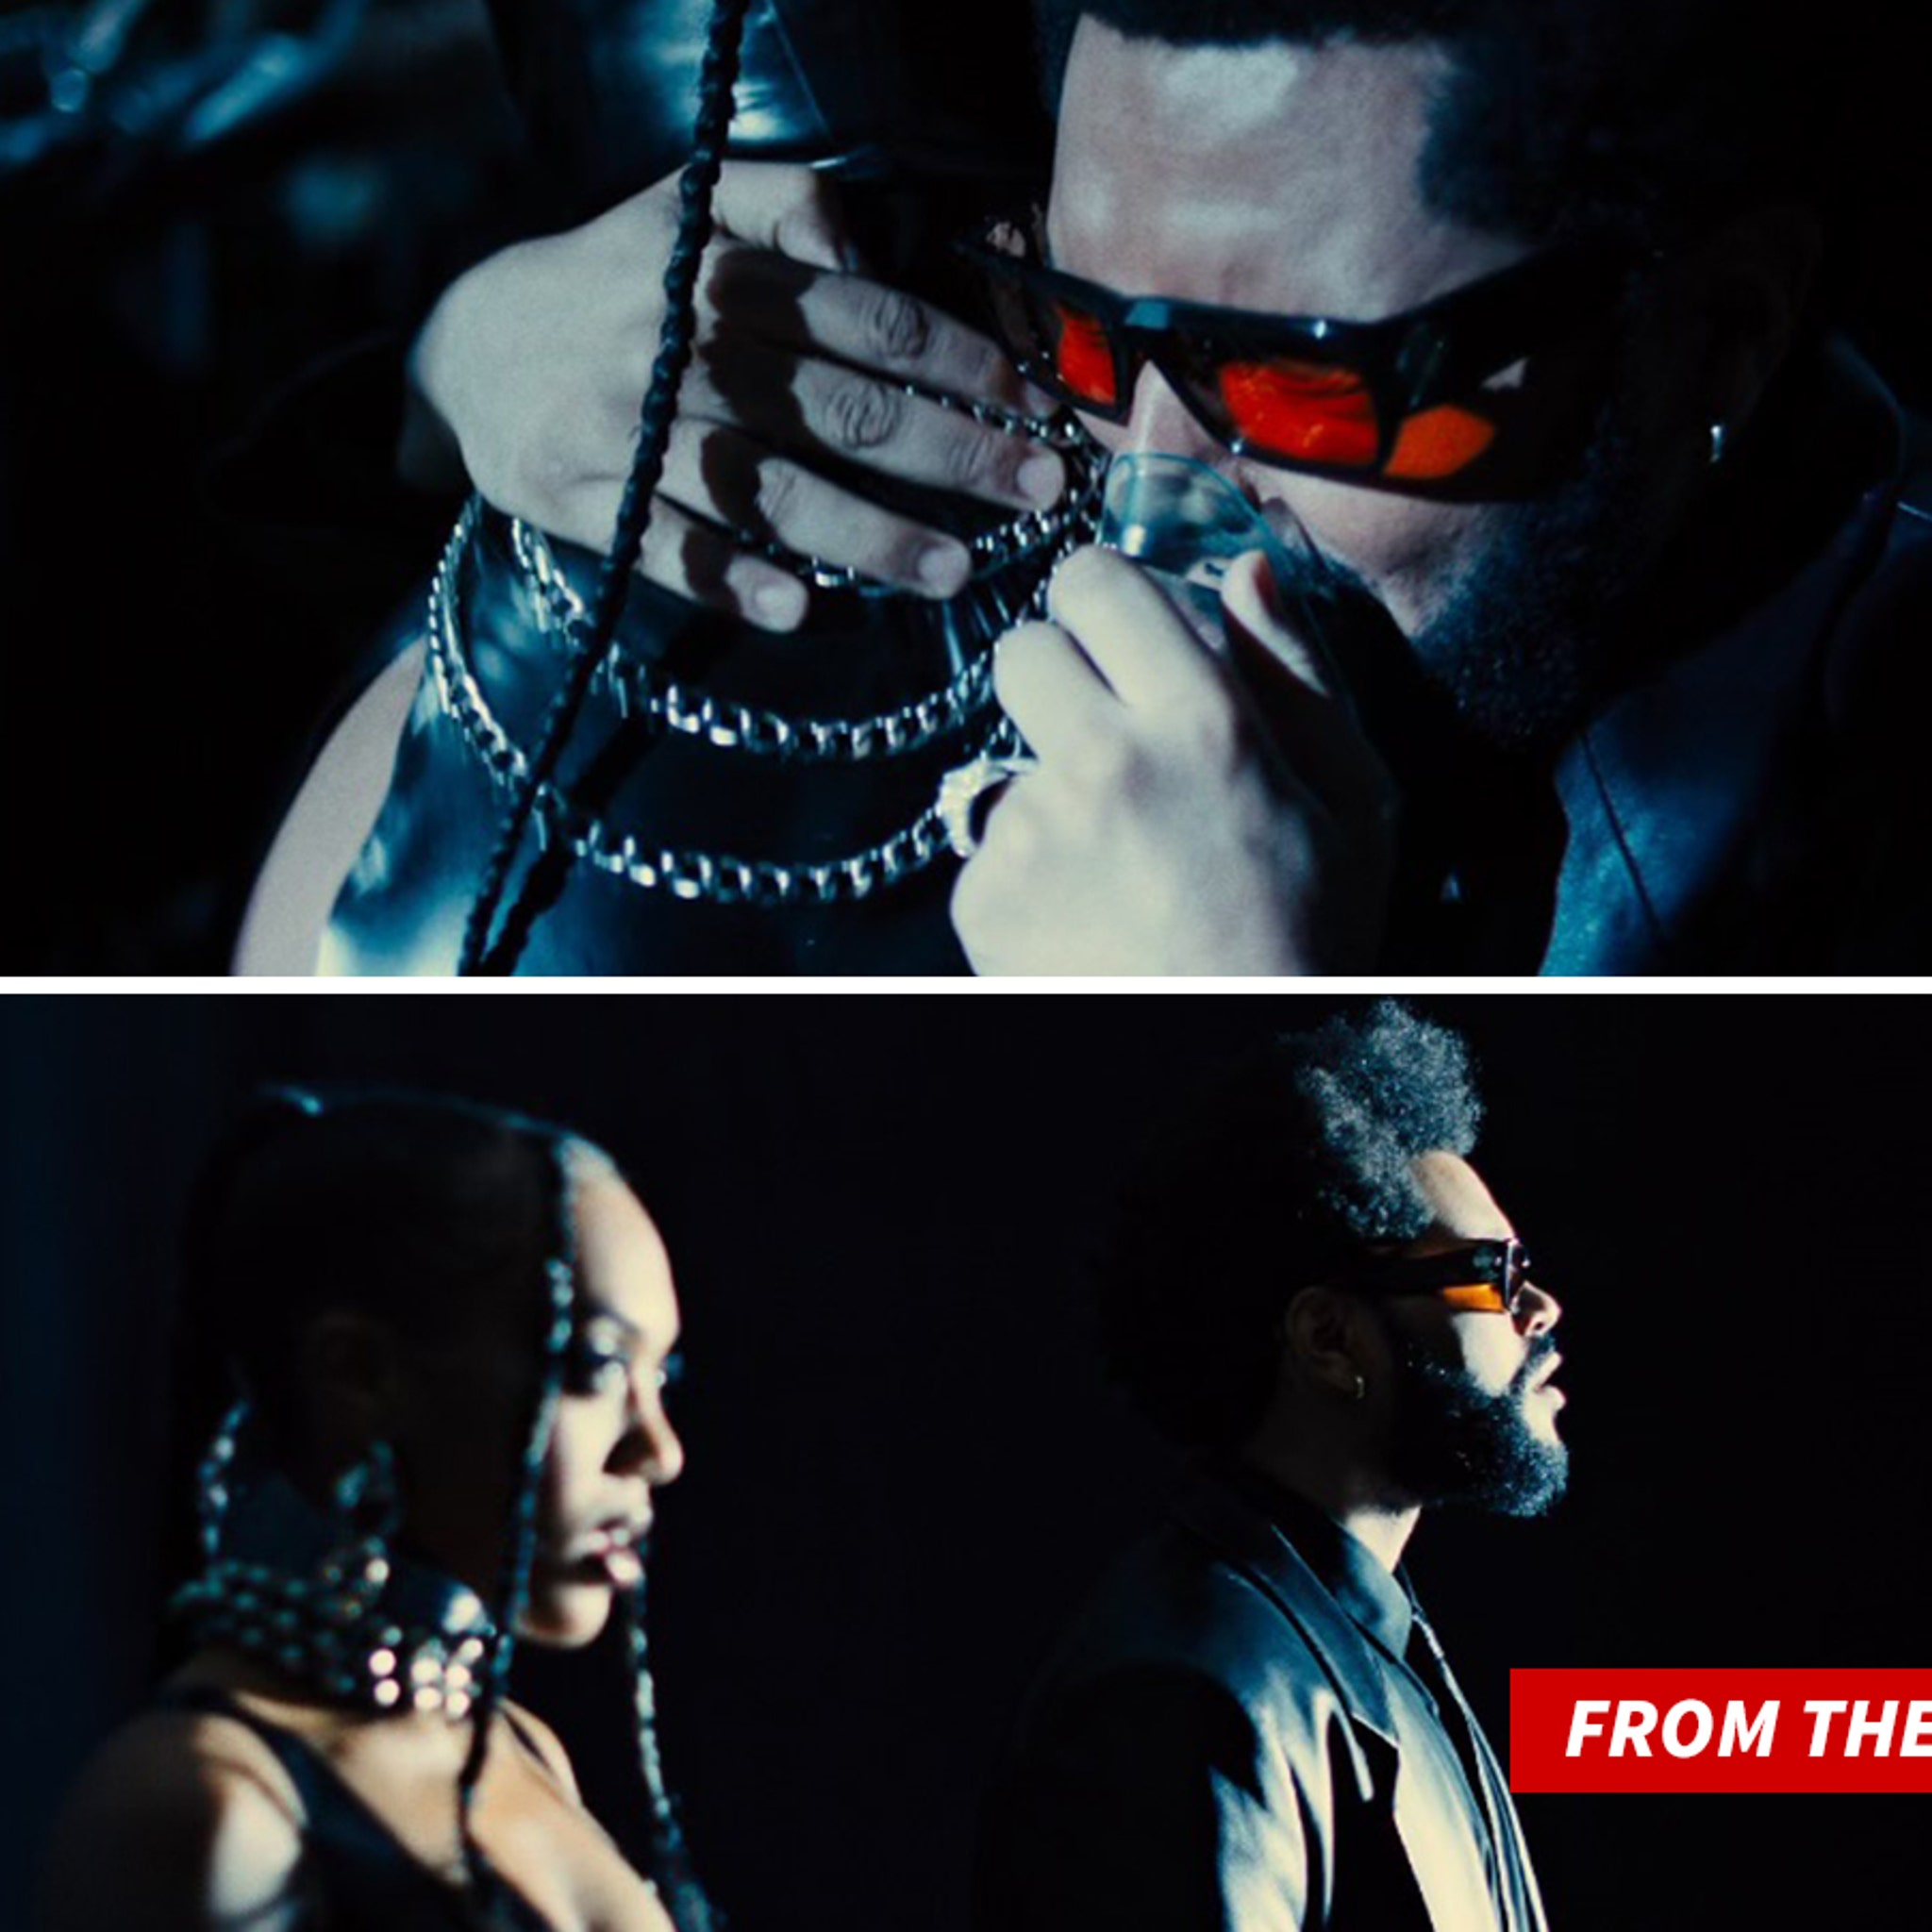 The Weeknd Drops 'Take My Breath' Music Video: WATCH